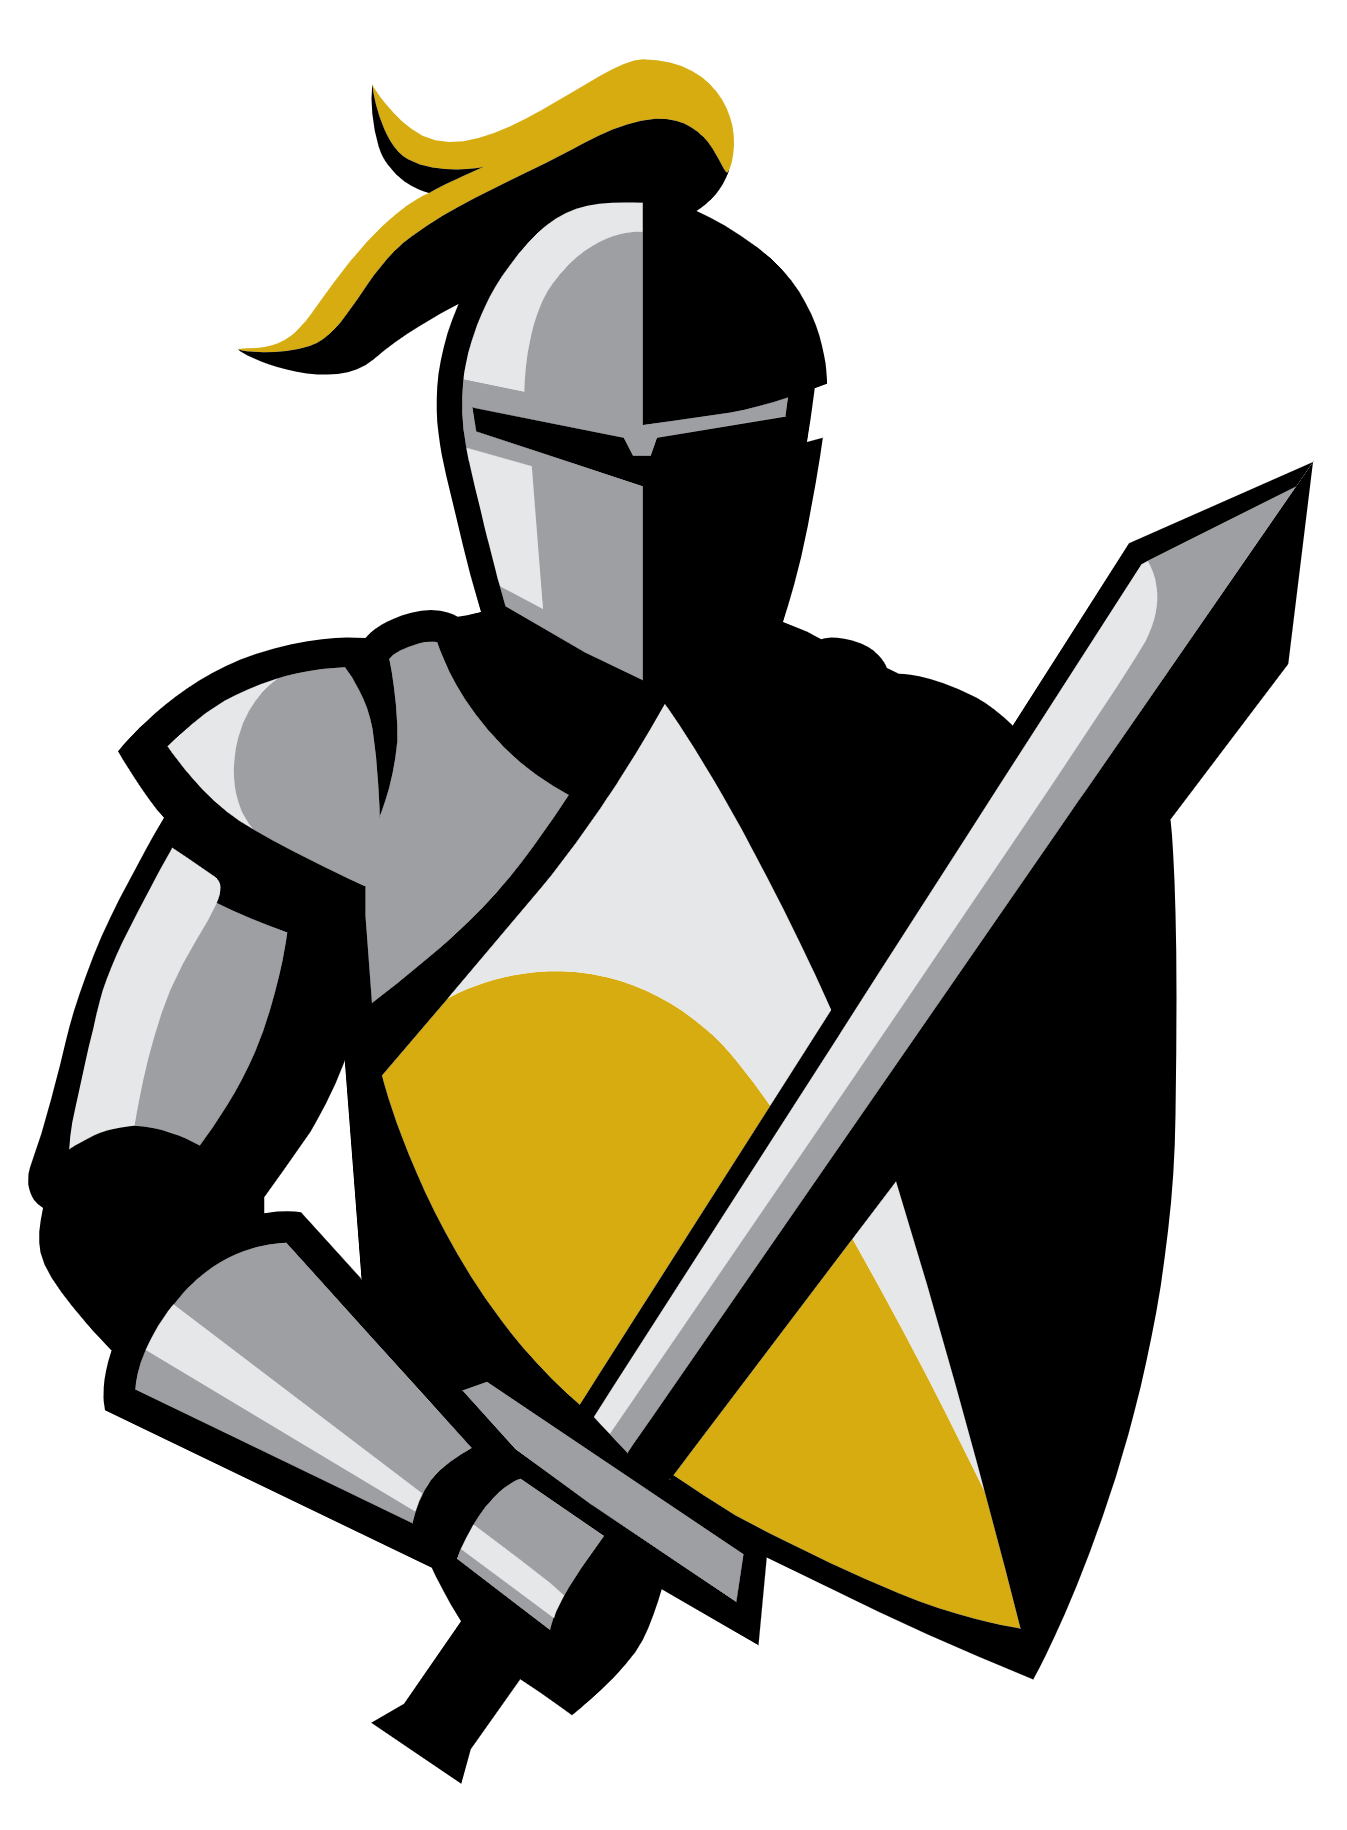 Black Knight logo (PNG transparent)